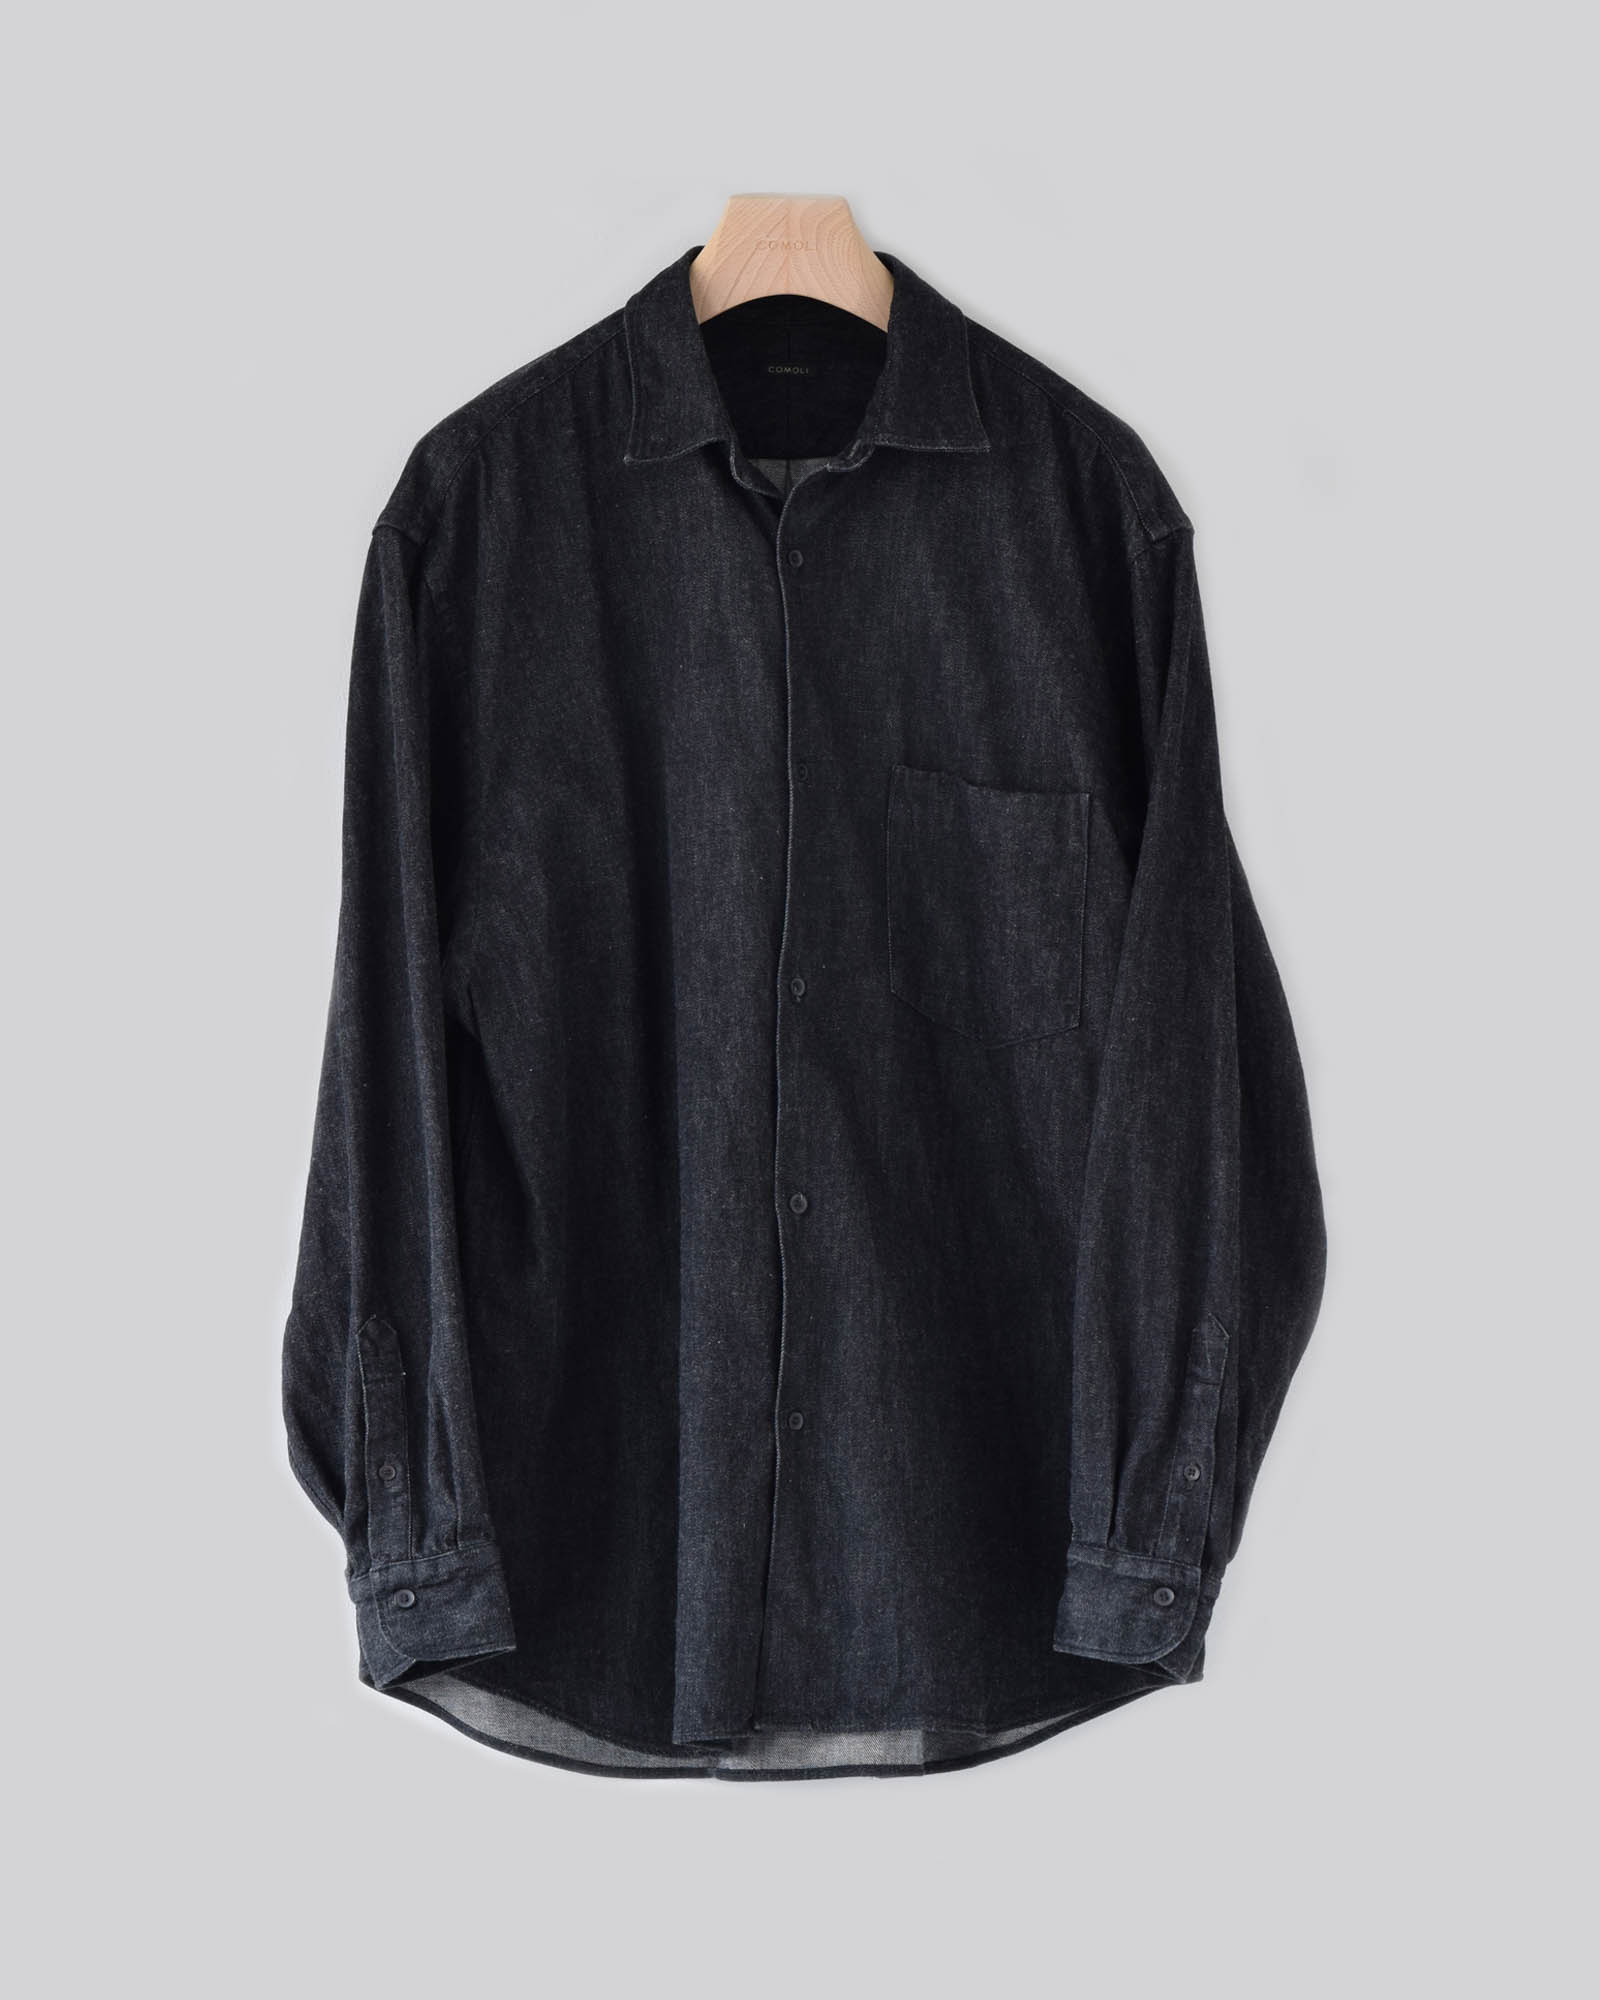 COMOLI Shirt Black size 4番号P01-02001